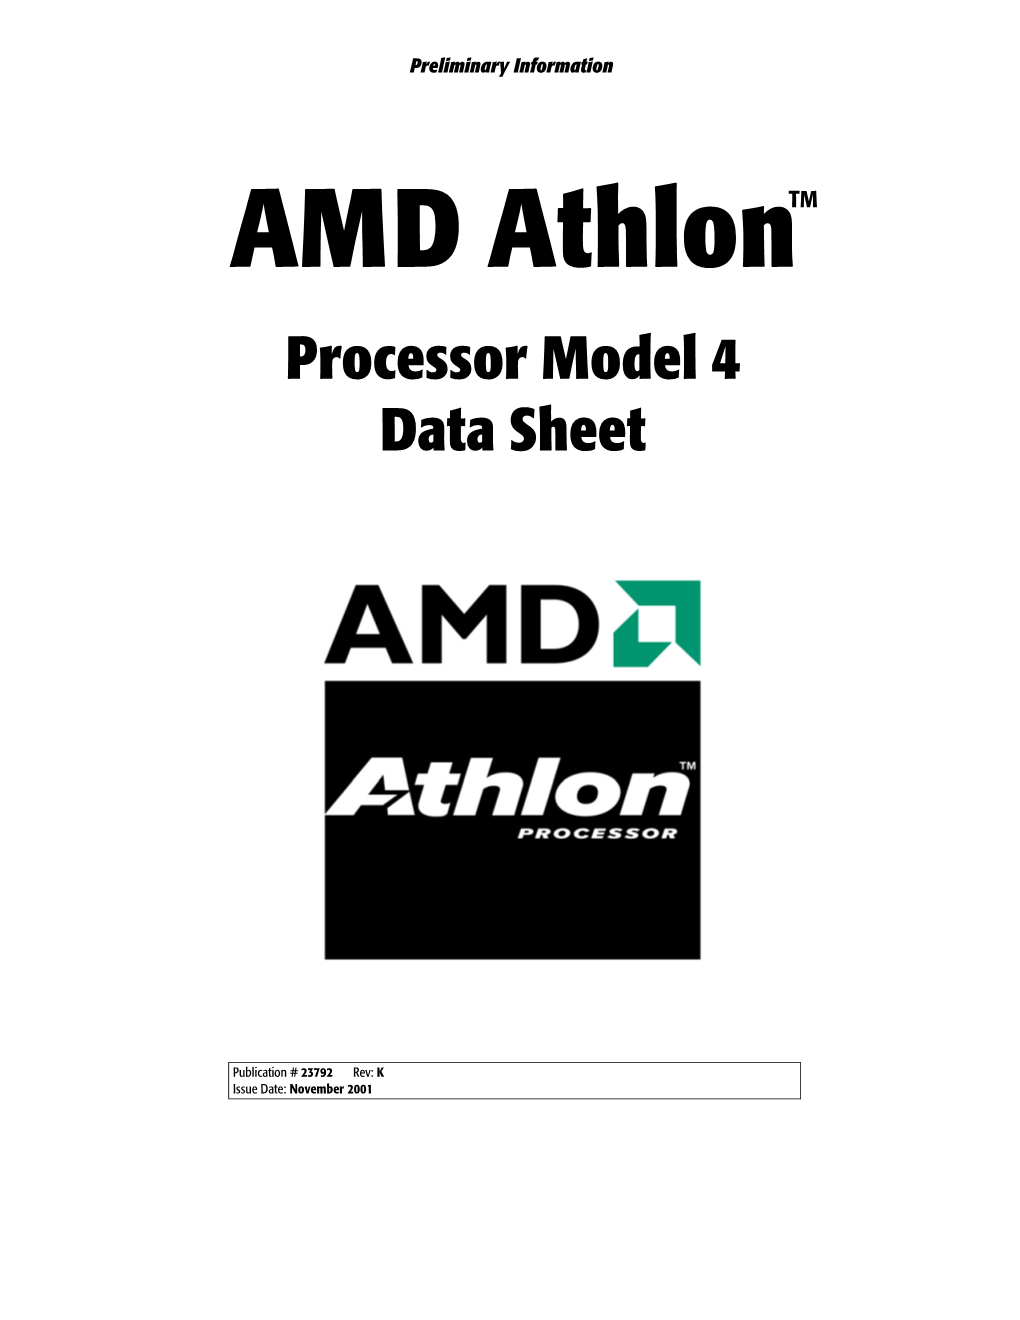 AMD Athlon Processor Model 4 Data Sheet